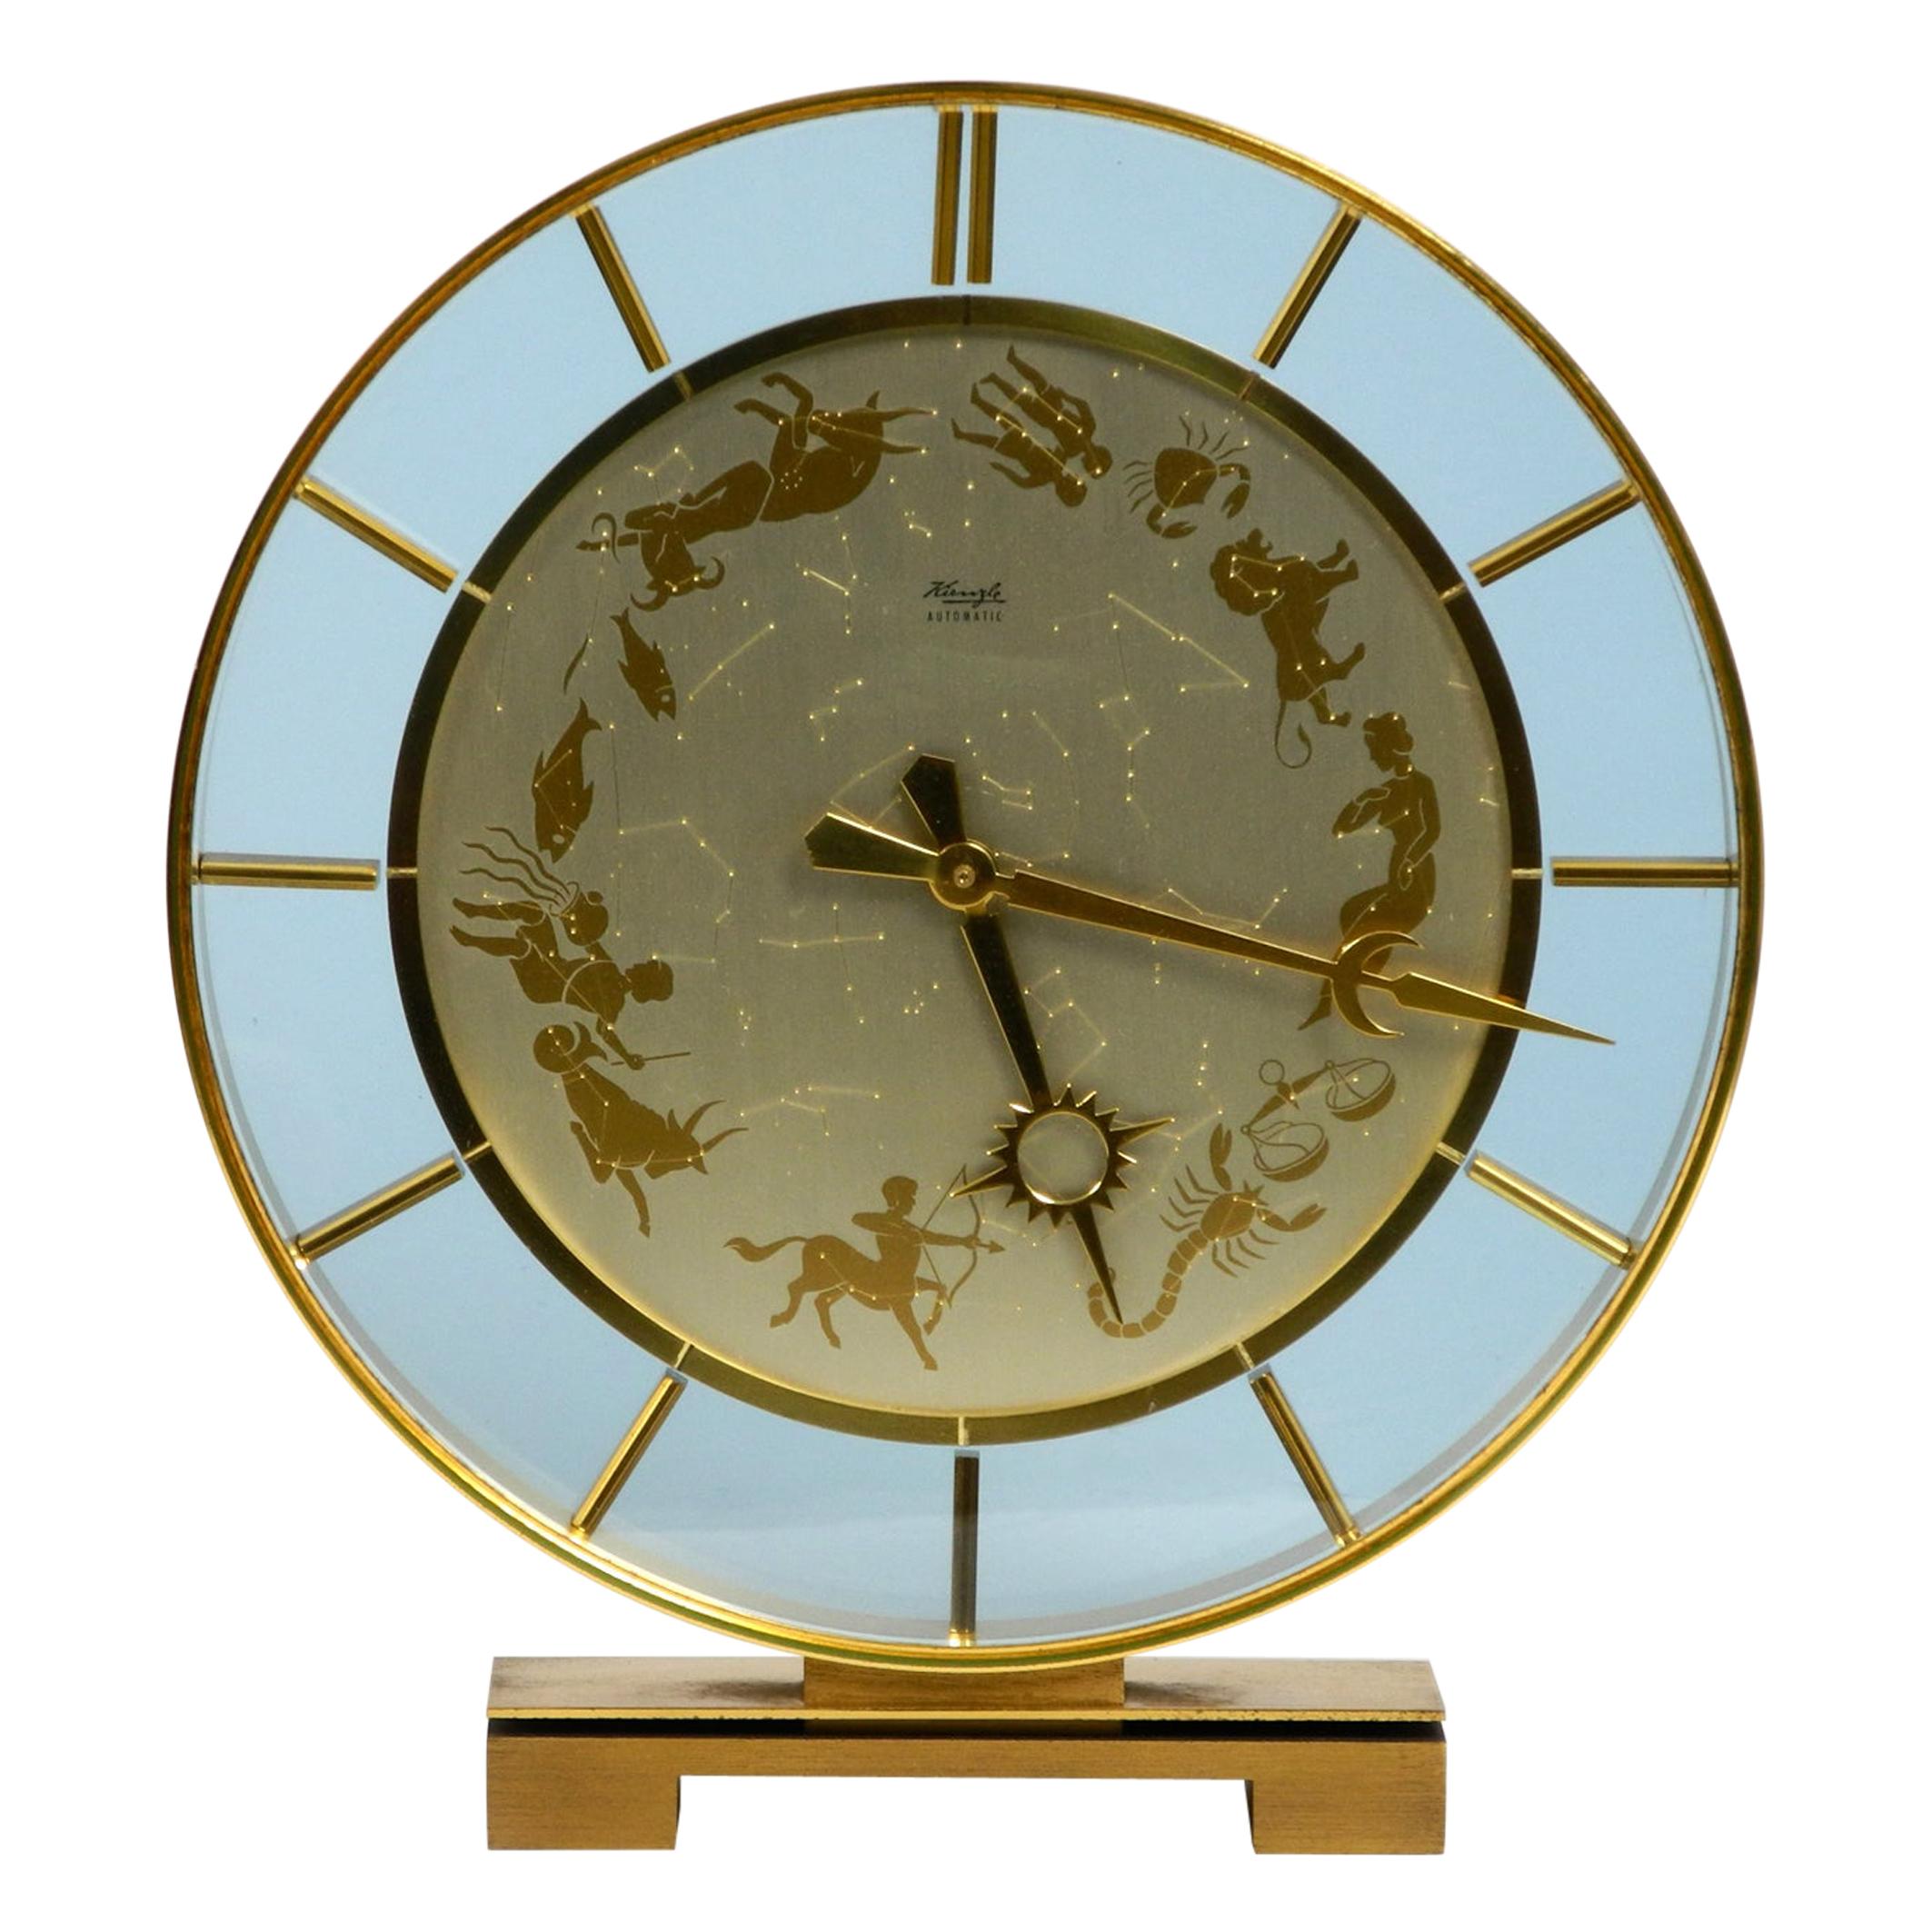 Rare Beautiful 1970s Big Kienzle Zodiac Table Clock Made of Heavy Brass